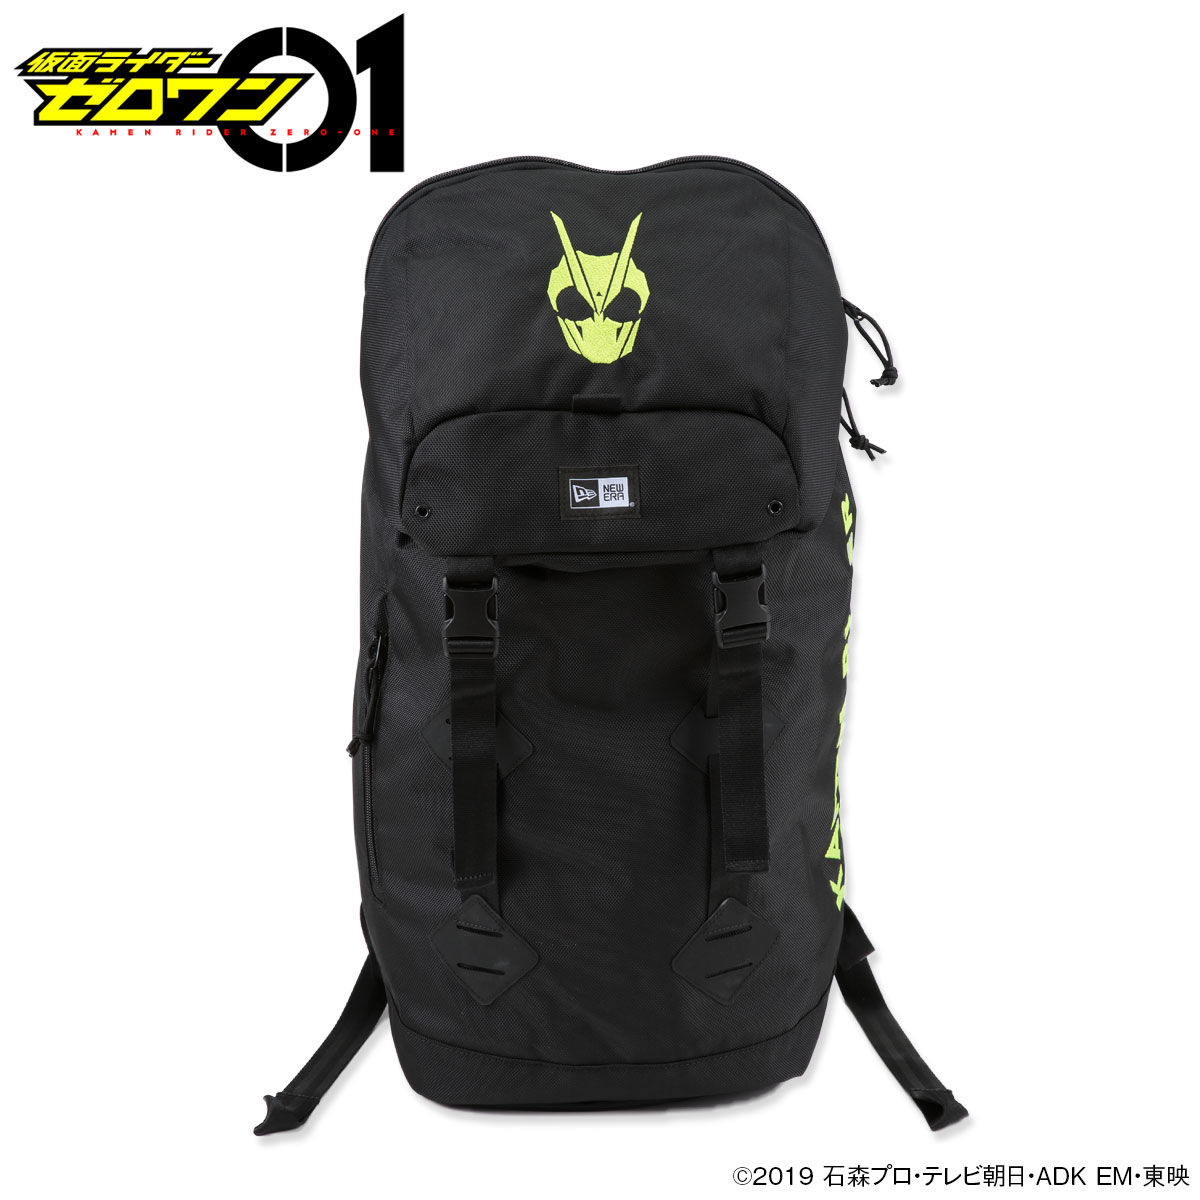 Backpack—Kamen Rider Zero-One/New Era Collaboration